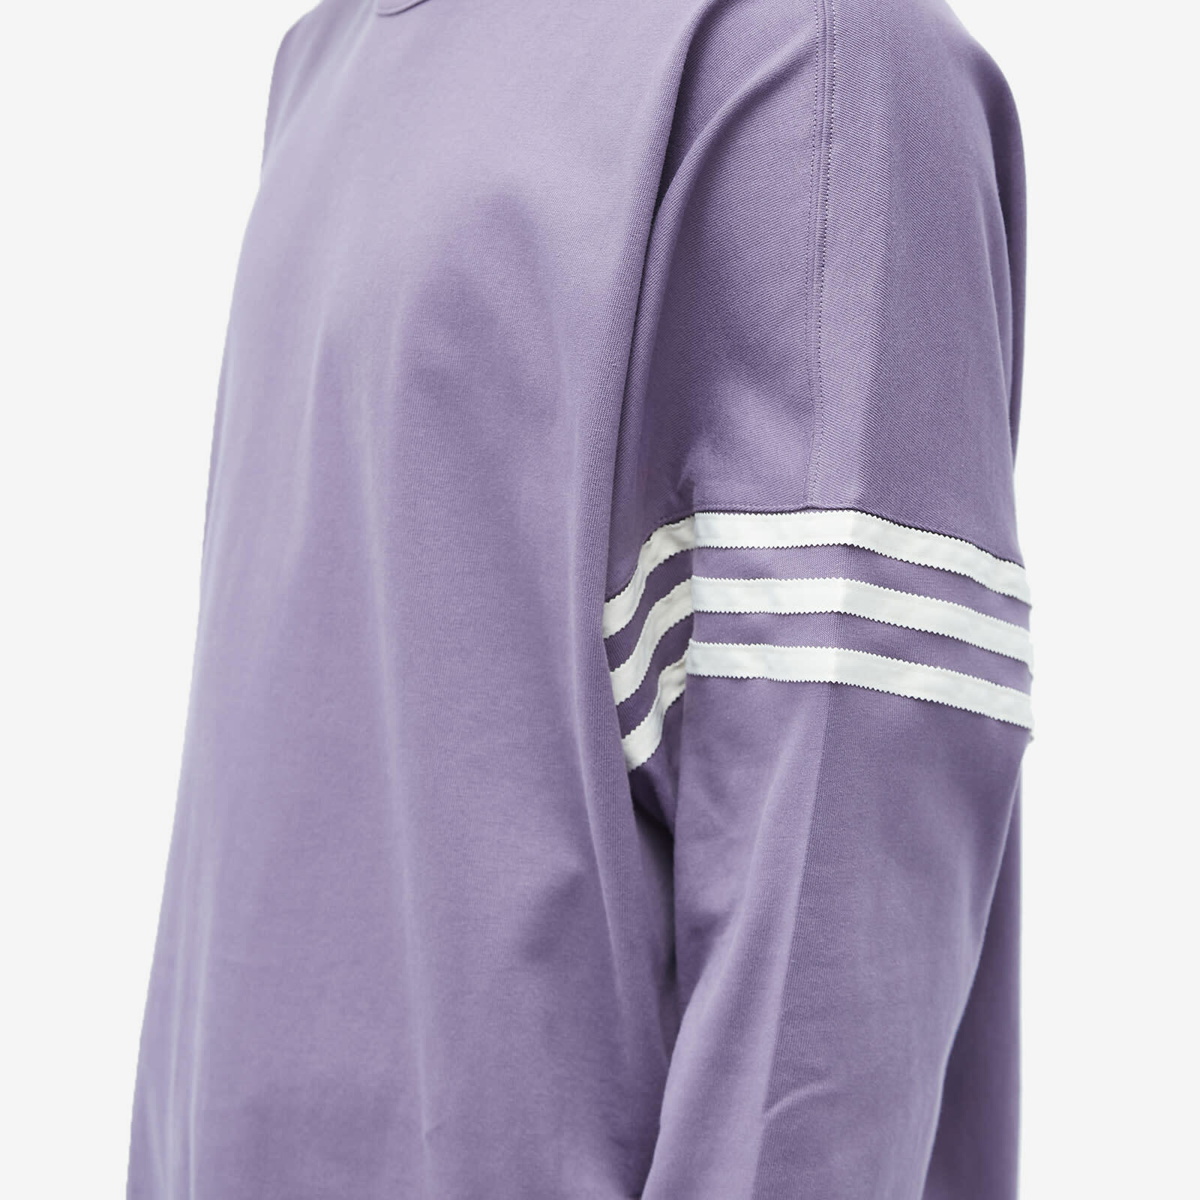 Adidas Men's Long Sleeve Neuclassics T-Shirt in Shadow Violet adidas